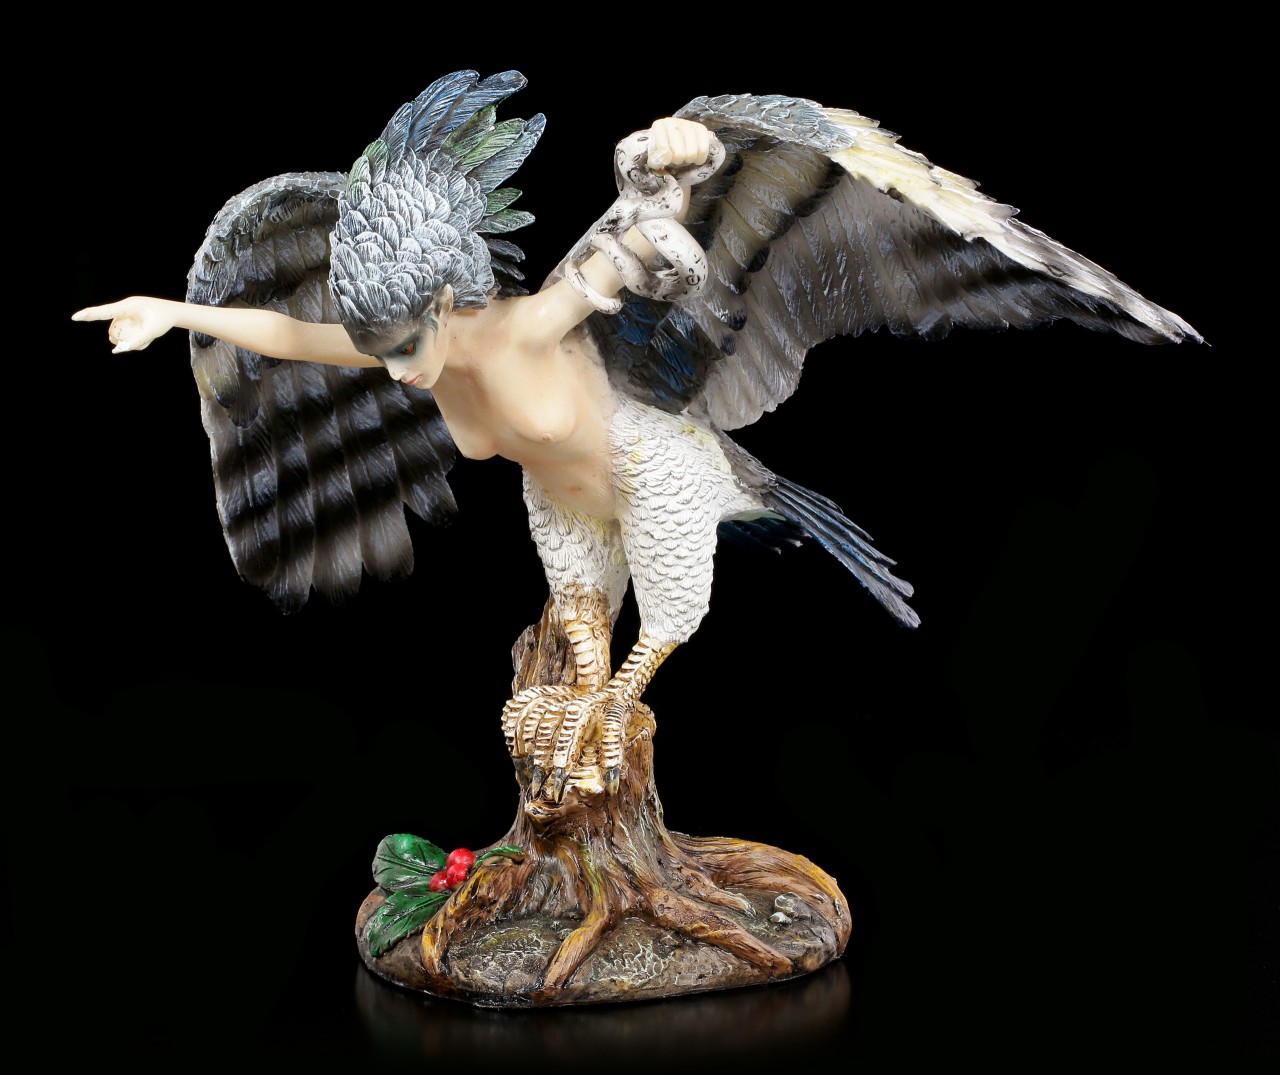 Harpy Mount Figurine by Sheila Wolk